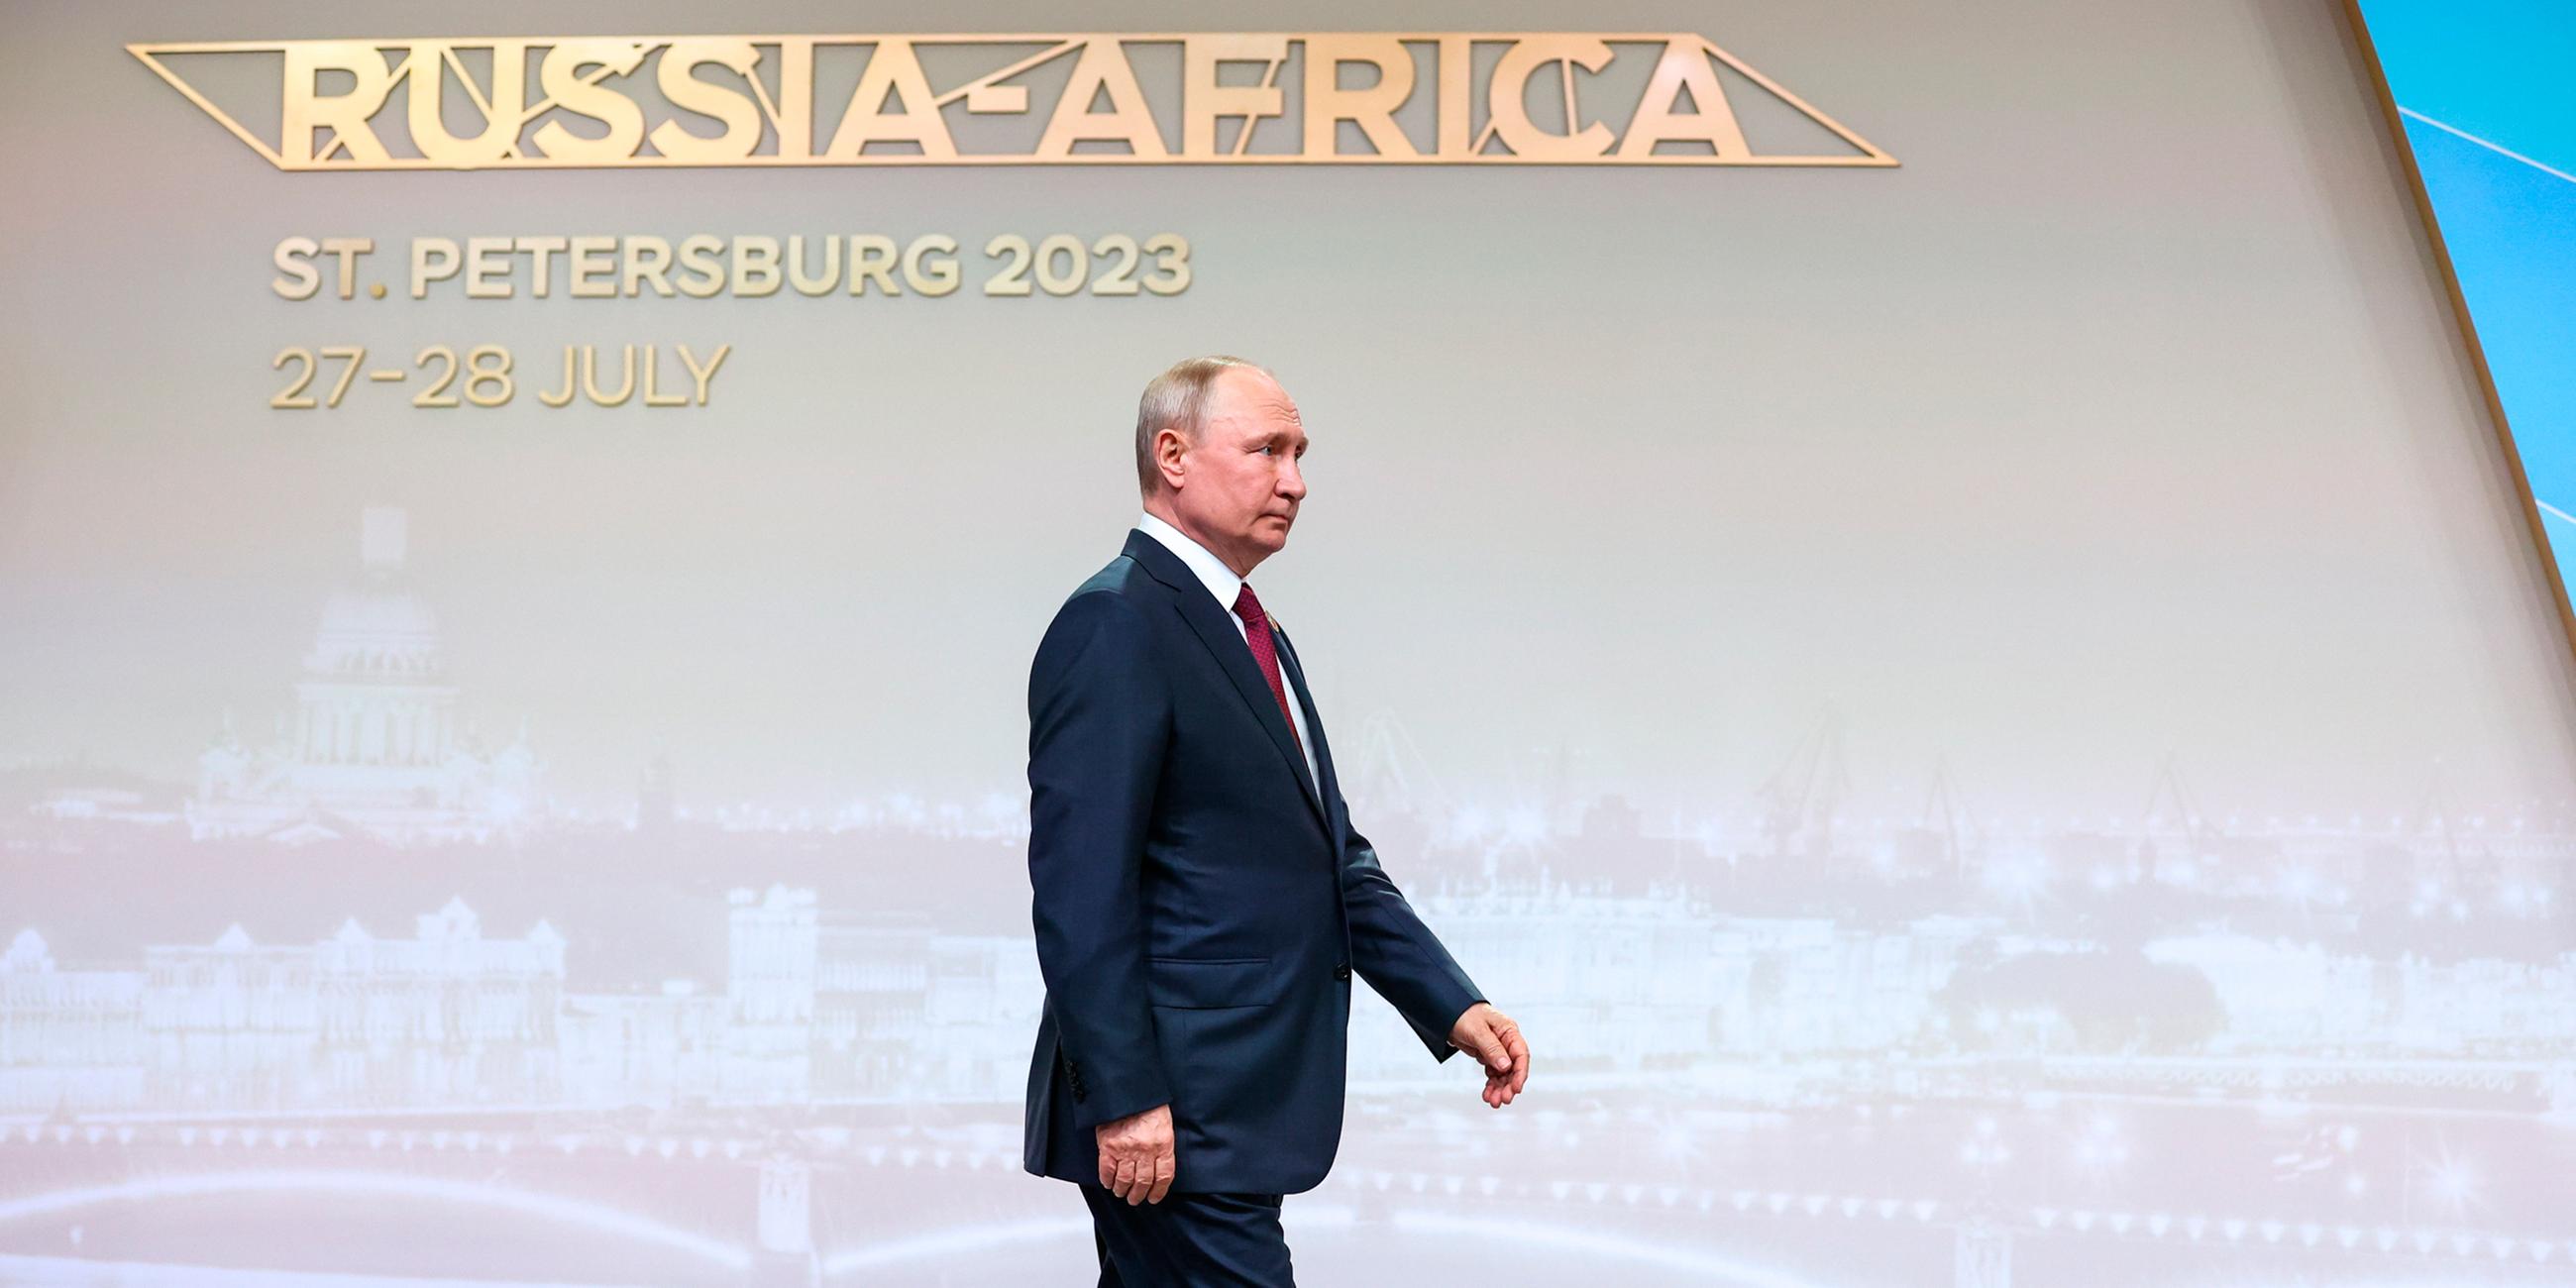 Wladimir Putin beim Russland-Afrika-Gipfel am 27.07.2023 in St. Petersburg